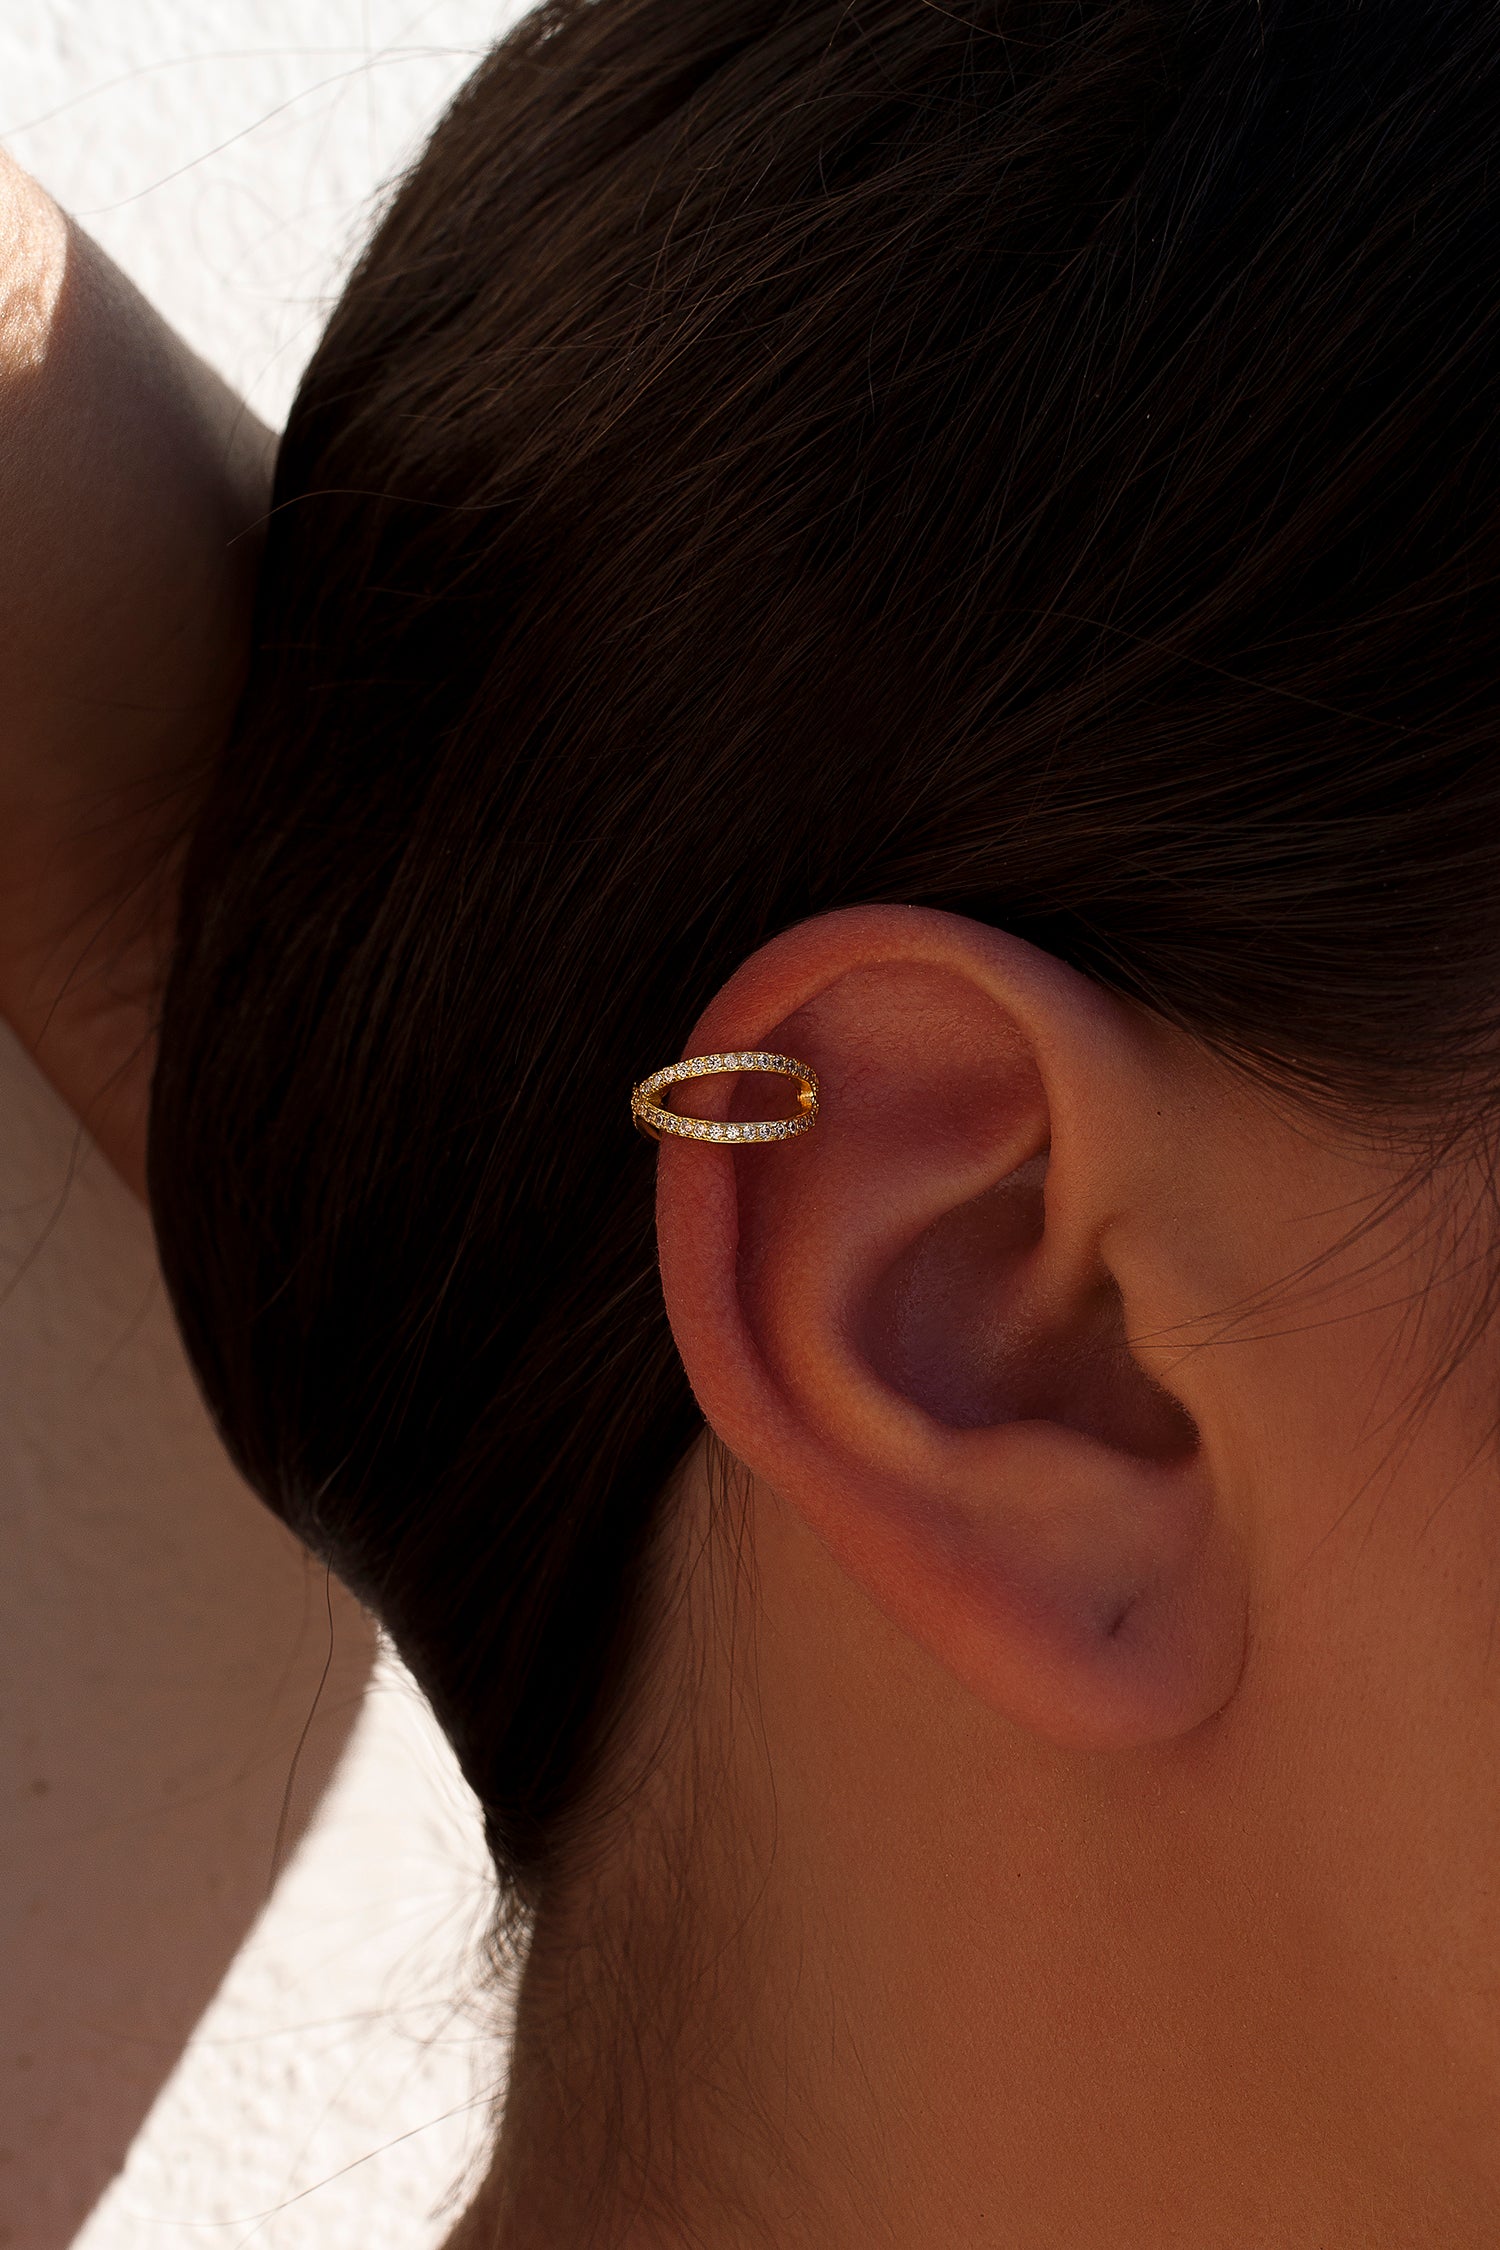 Ear cuff de plata bañada en oro diseño cruzado de circonitas